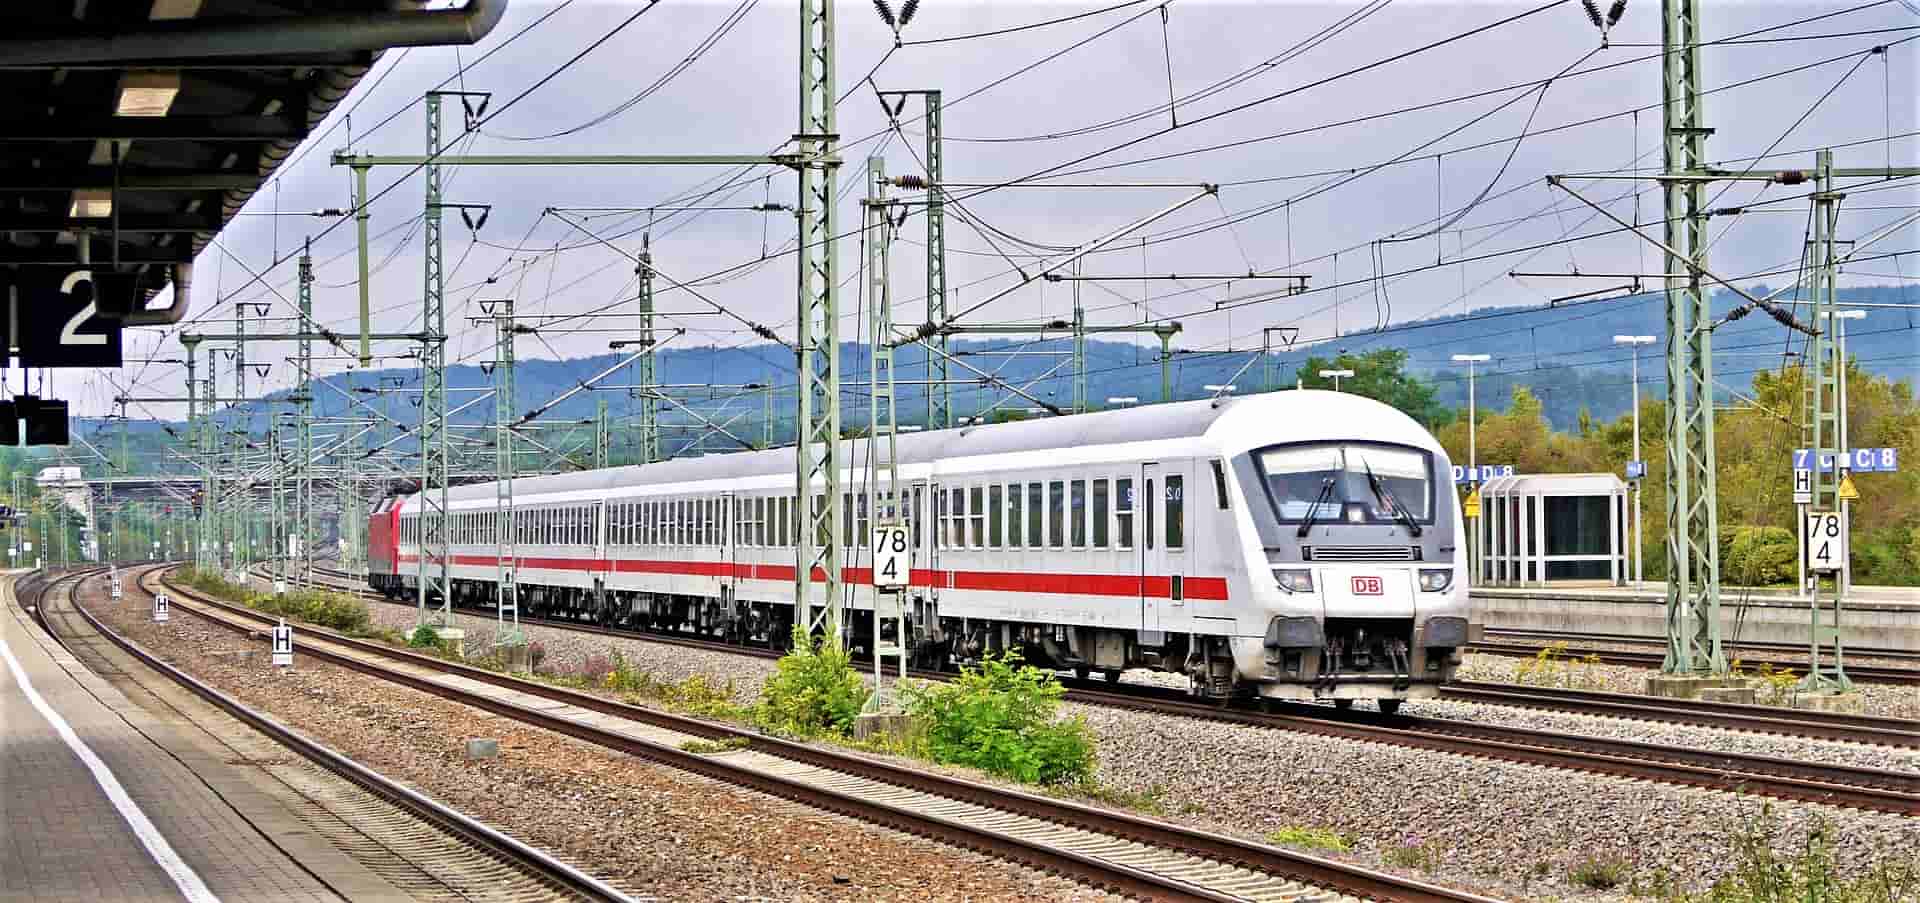 DB Intercity train - transportation_getting around in Germany_ Pixabay-min